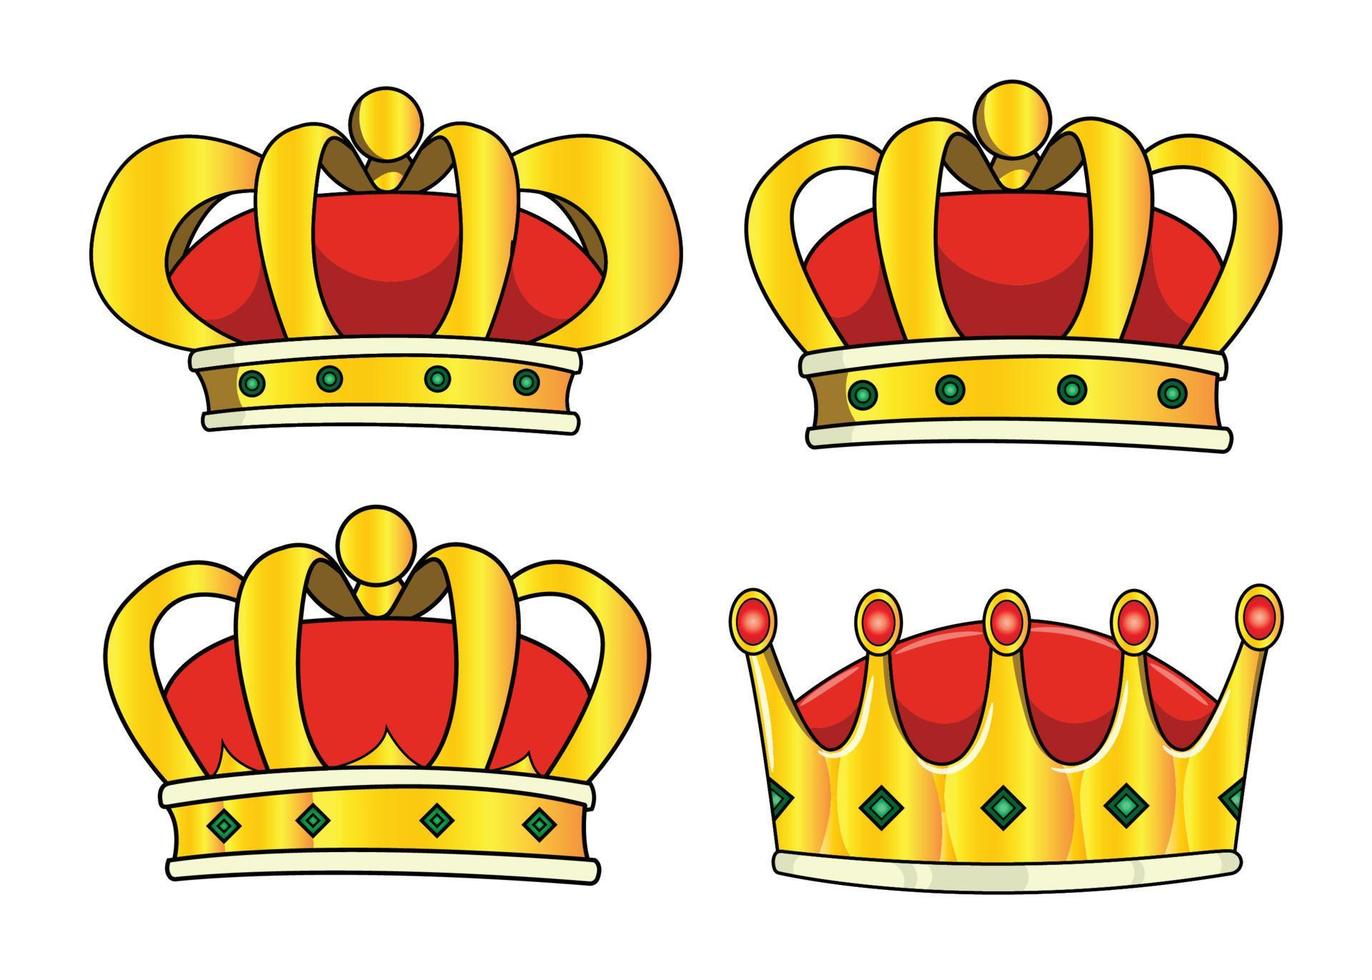 colección de corona de rey majestuosa dorada vector